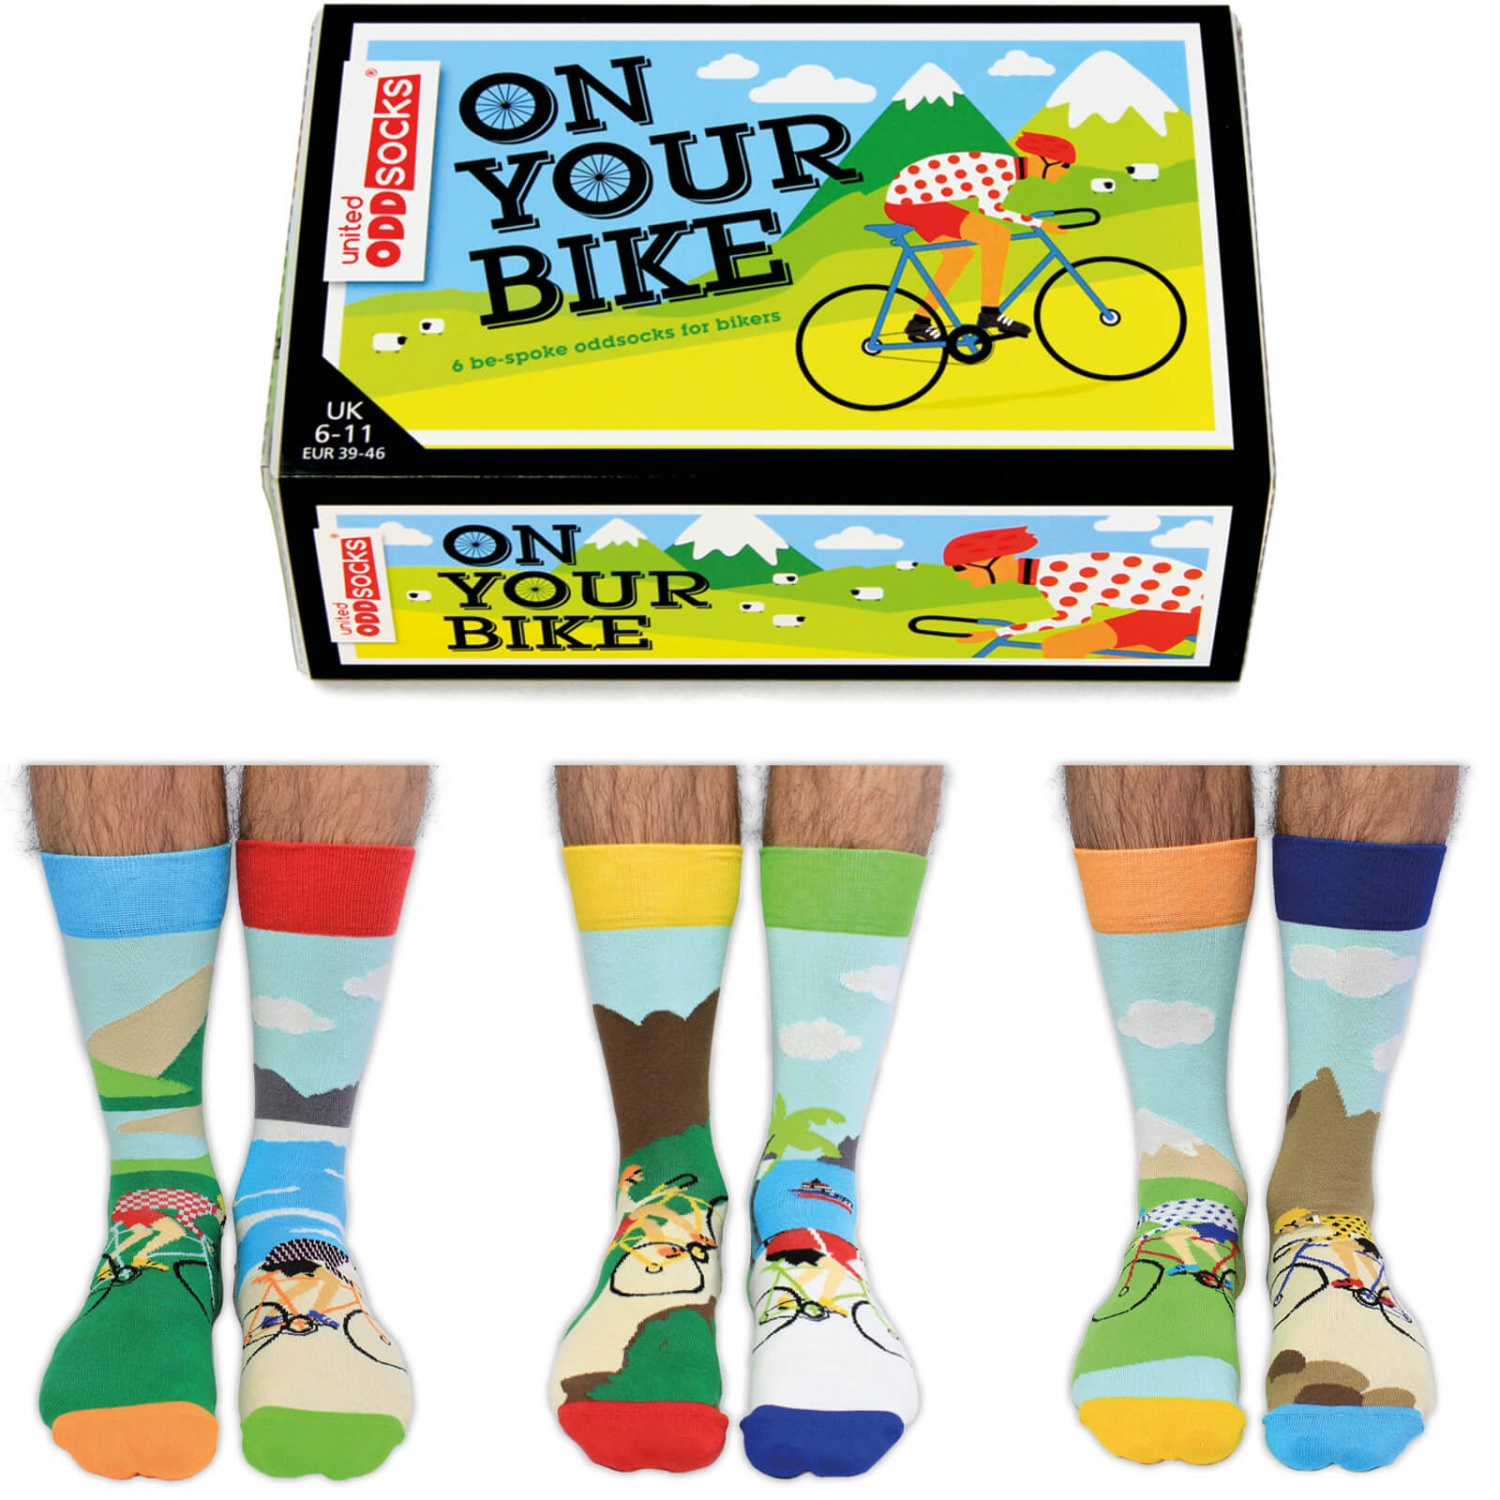 On Your Bike Novelty Socks from United Oddsocks